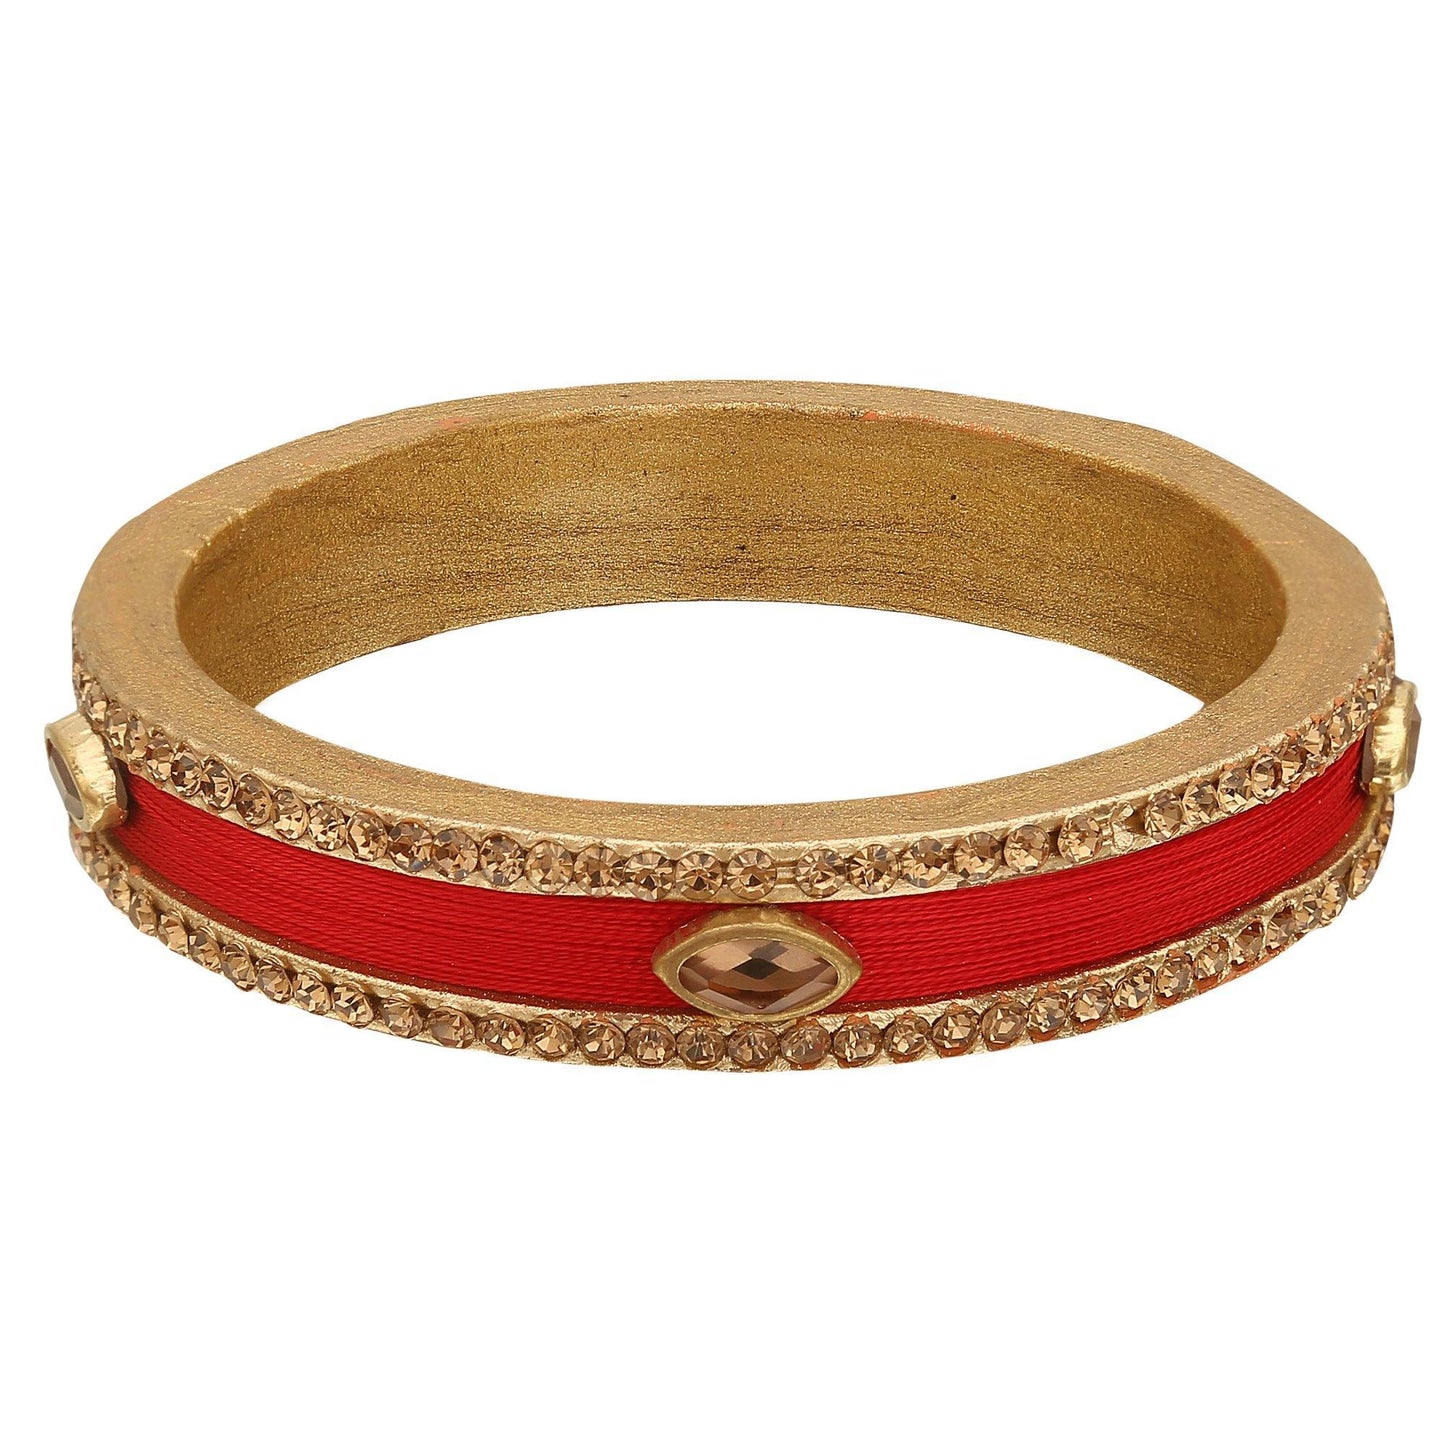 sukriti rajasthani wedding silk thread lac chuda red bangles bridal jewelry for women - set of 20